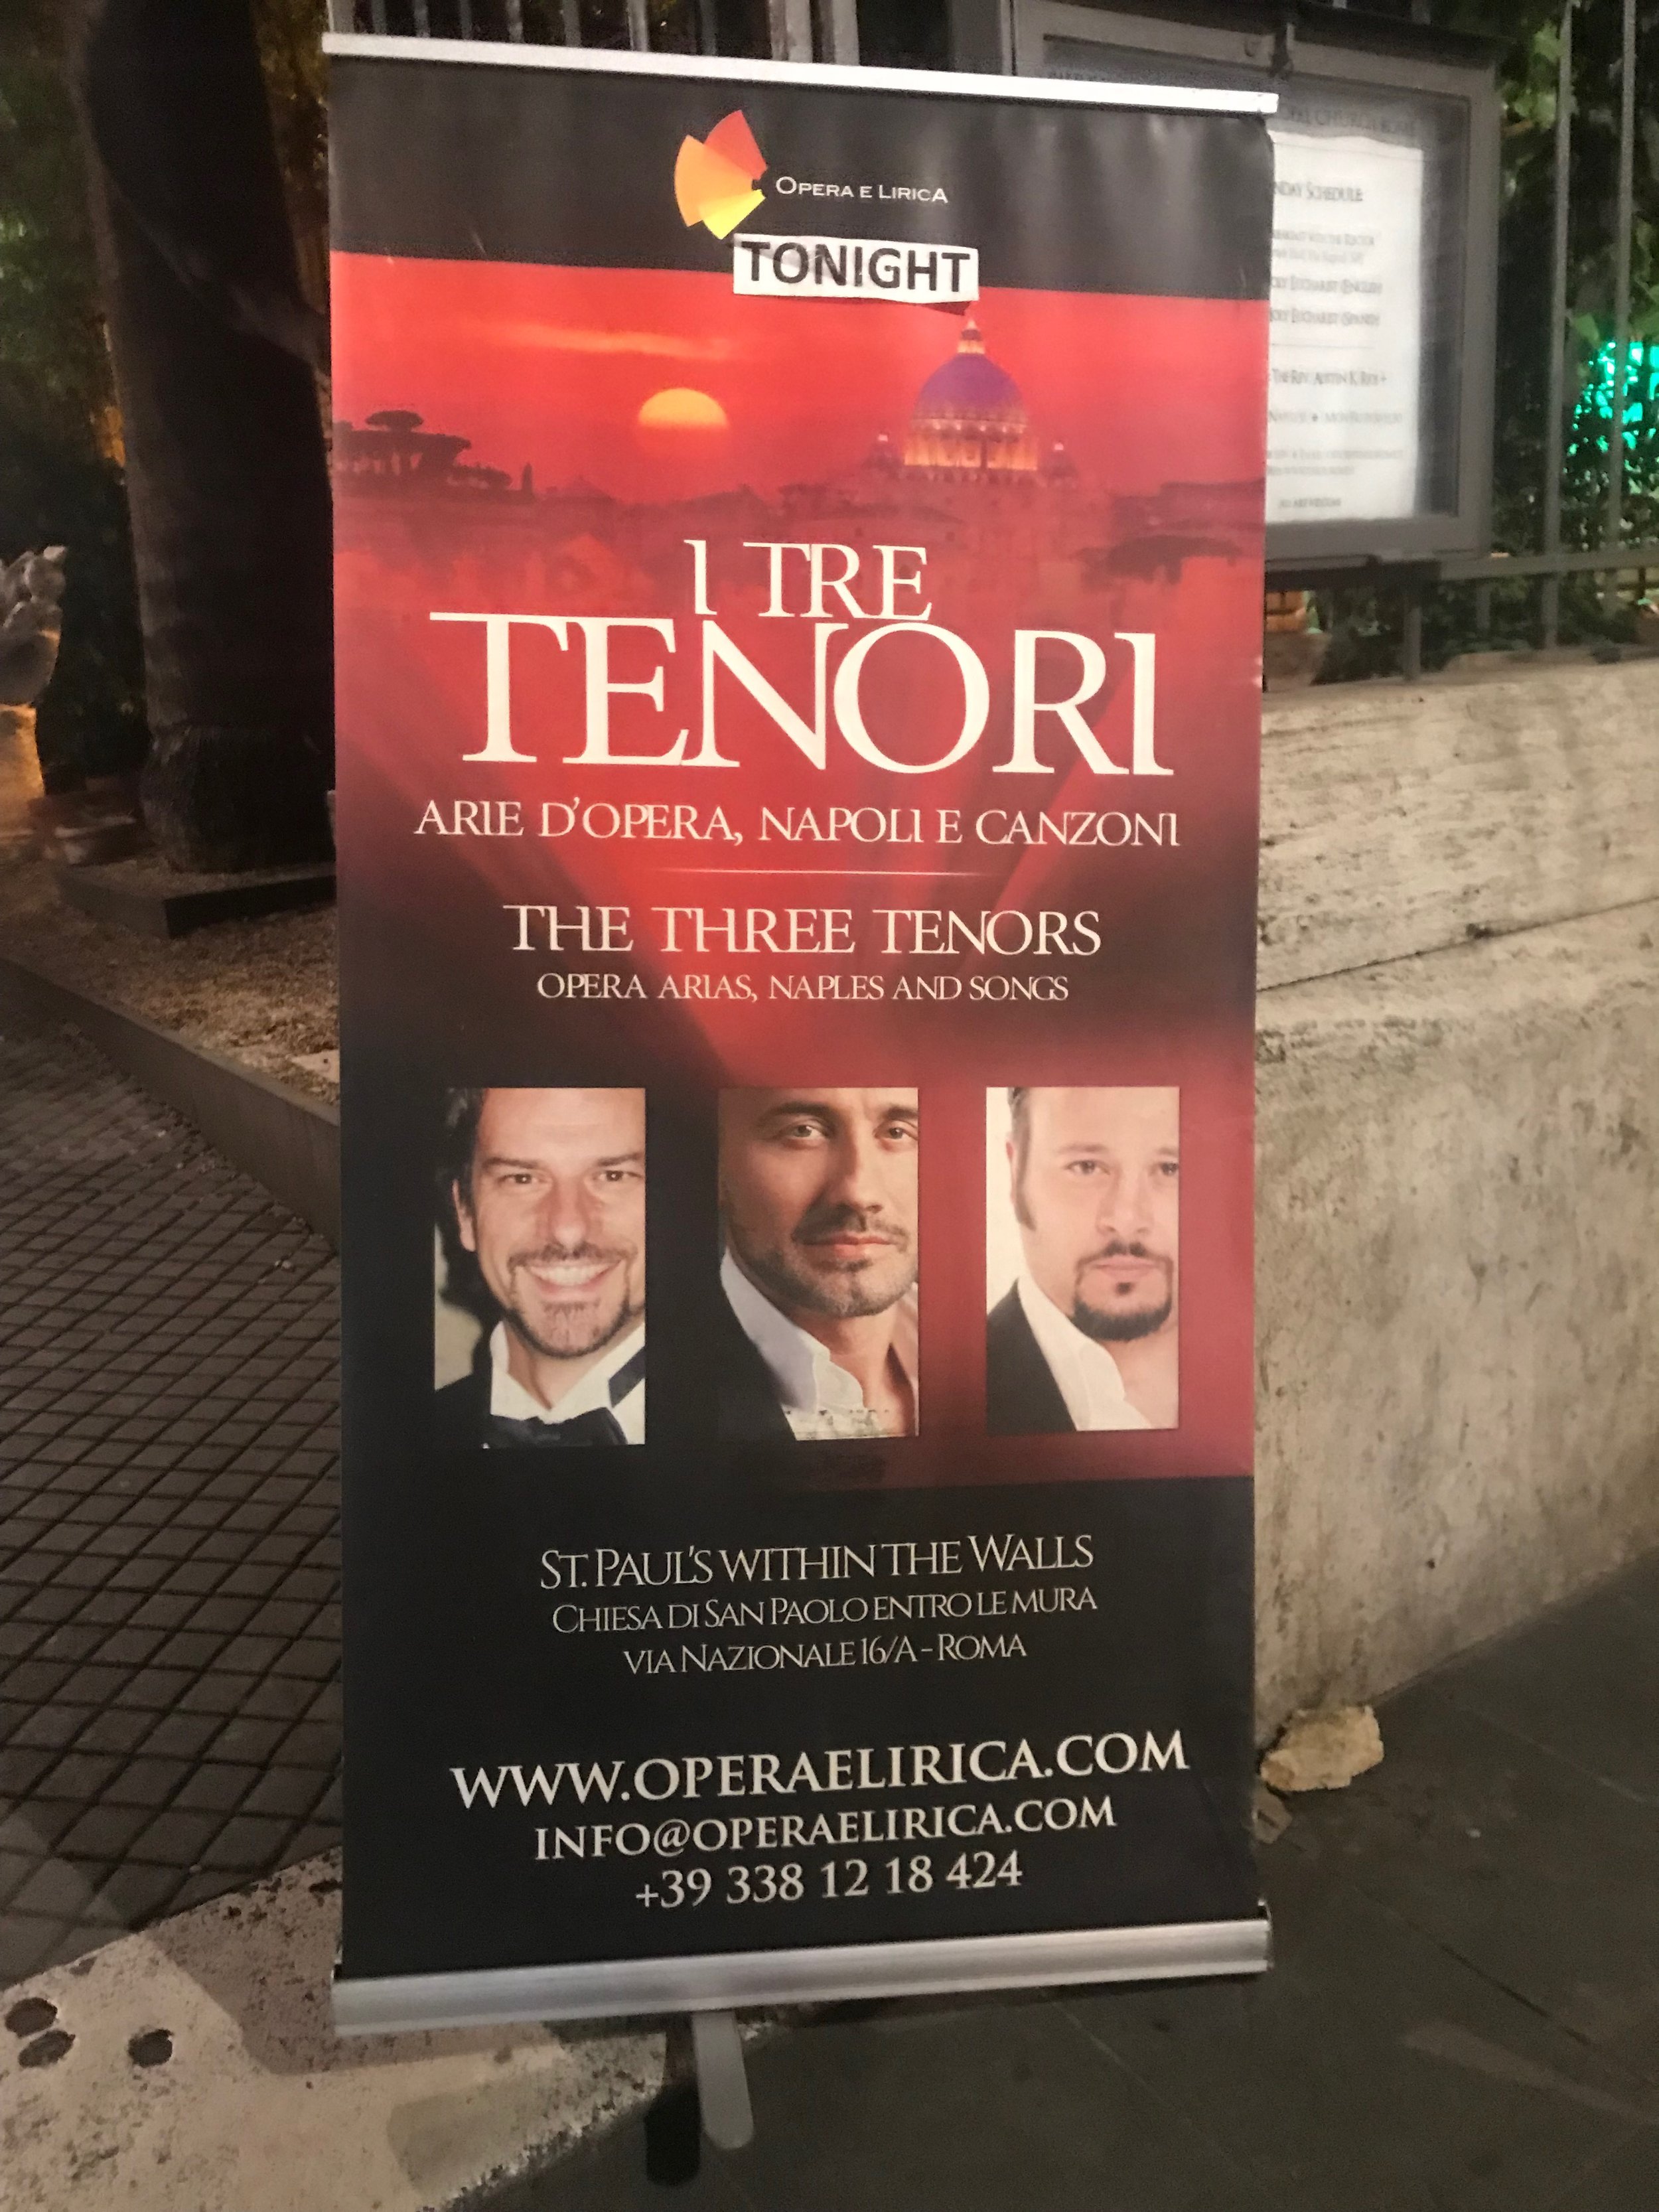 Ithree tenors in Rome.jpg